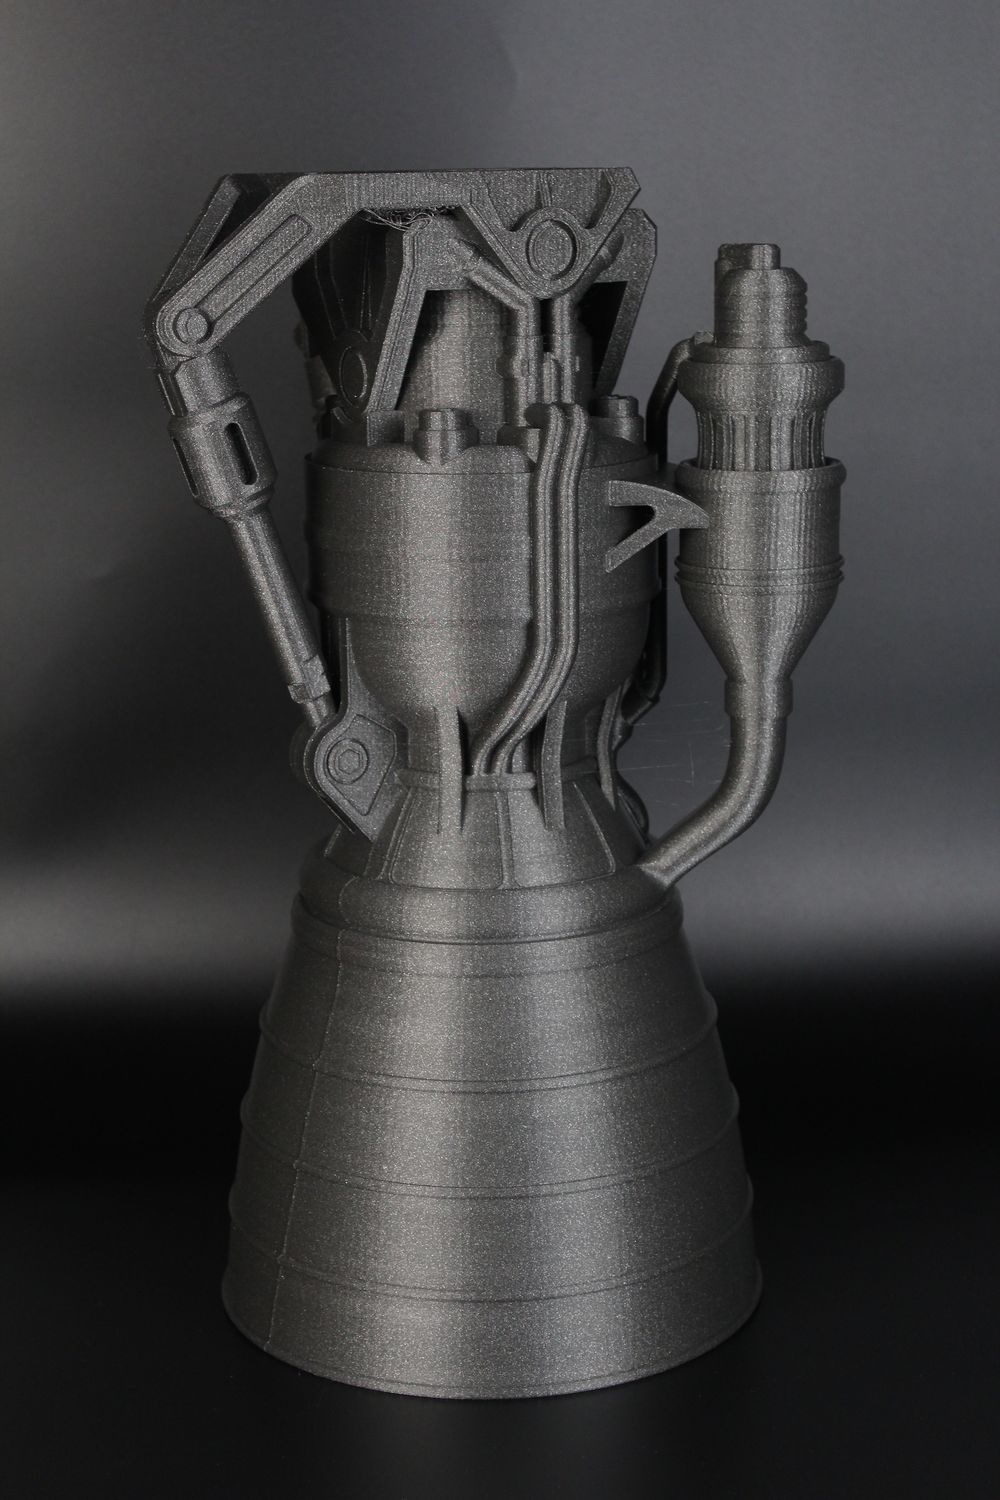 Prusa MK4 Rocket Engine CR M4 Large Model Print1 | Creality CR-M4 Review: Large Format 3D Printer